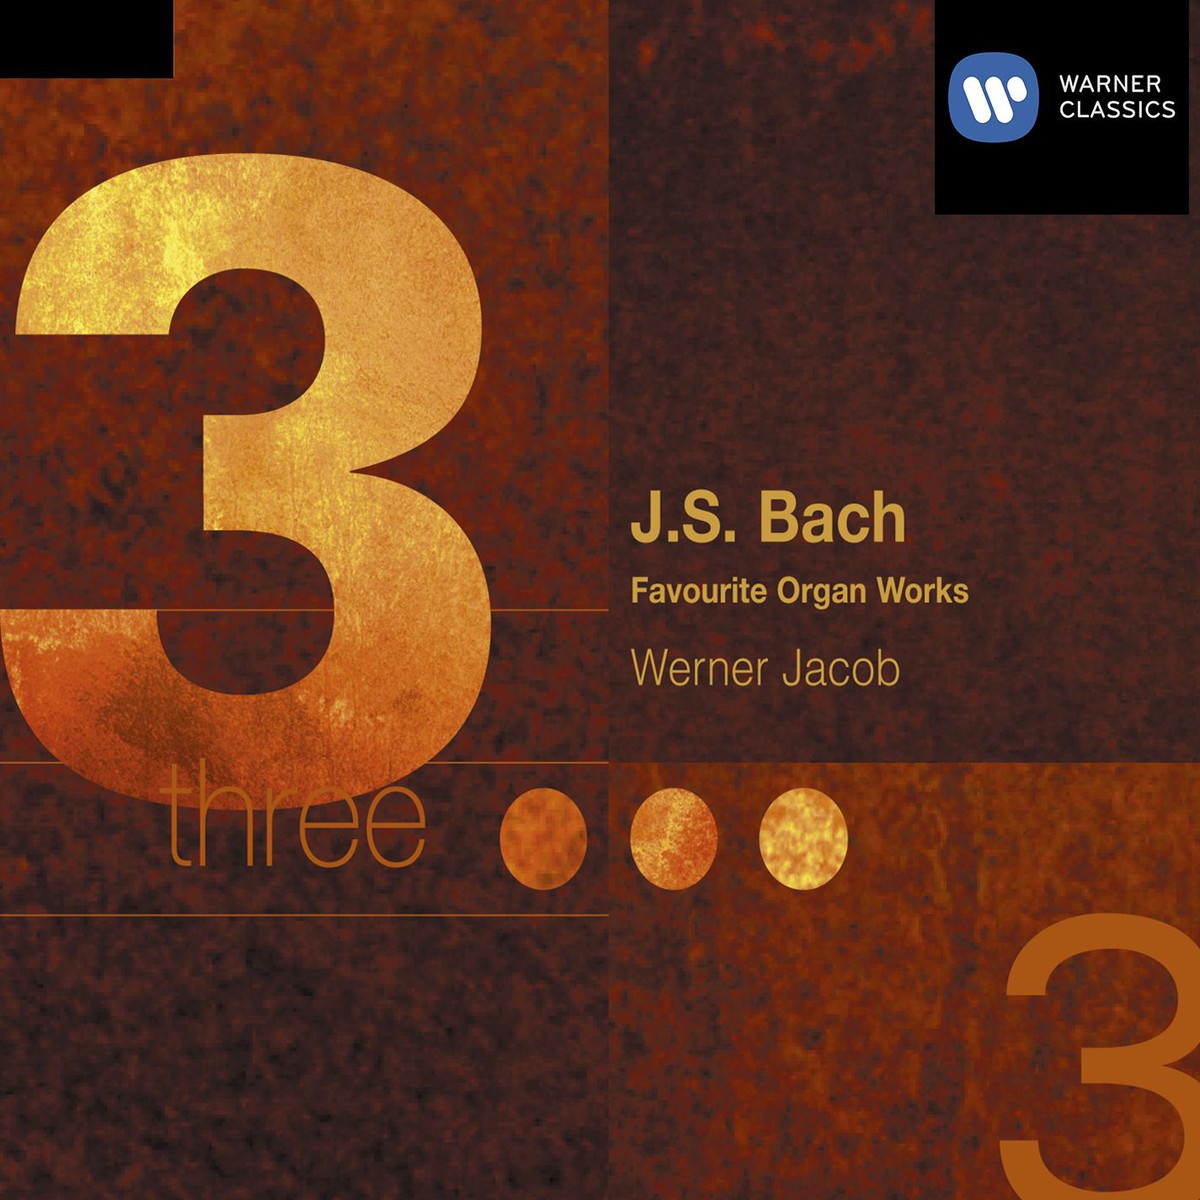 Sechs Schü blerChor le Nr. 16 BWV 645650 1992 Digital Remaster: Nr. 5  Ach, bleib' bei uns, Herr Jesu Christ, BWV 649